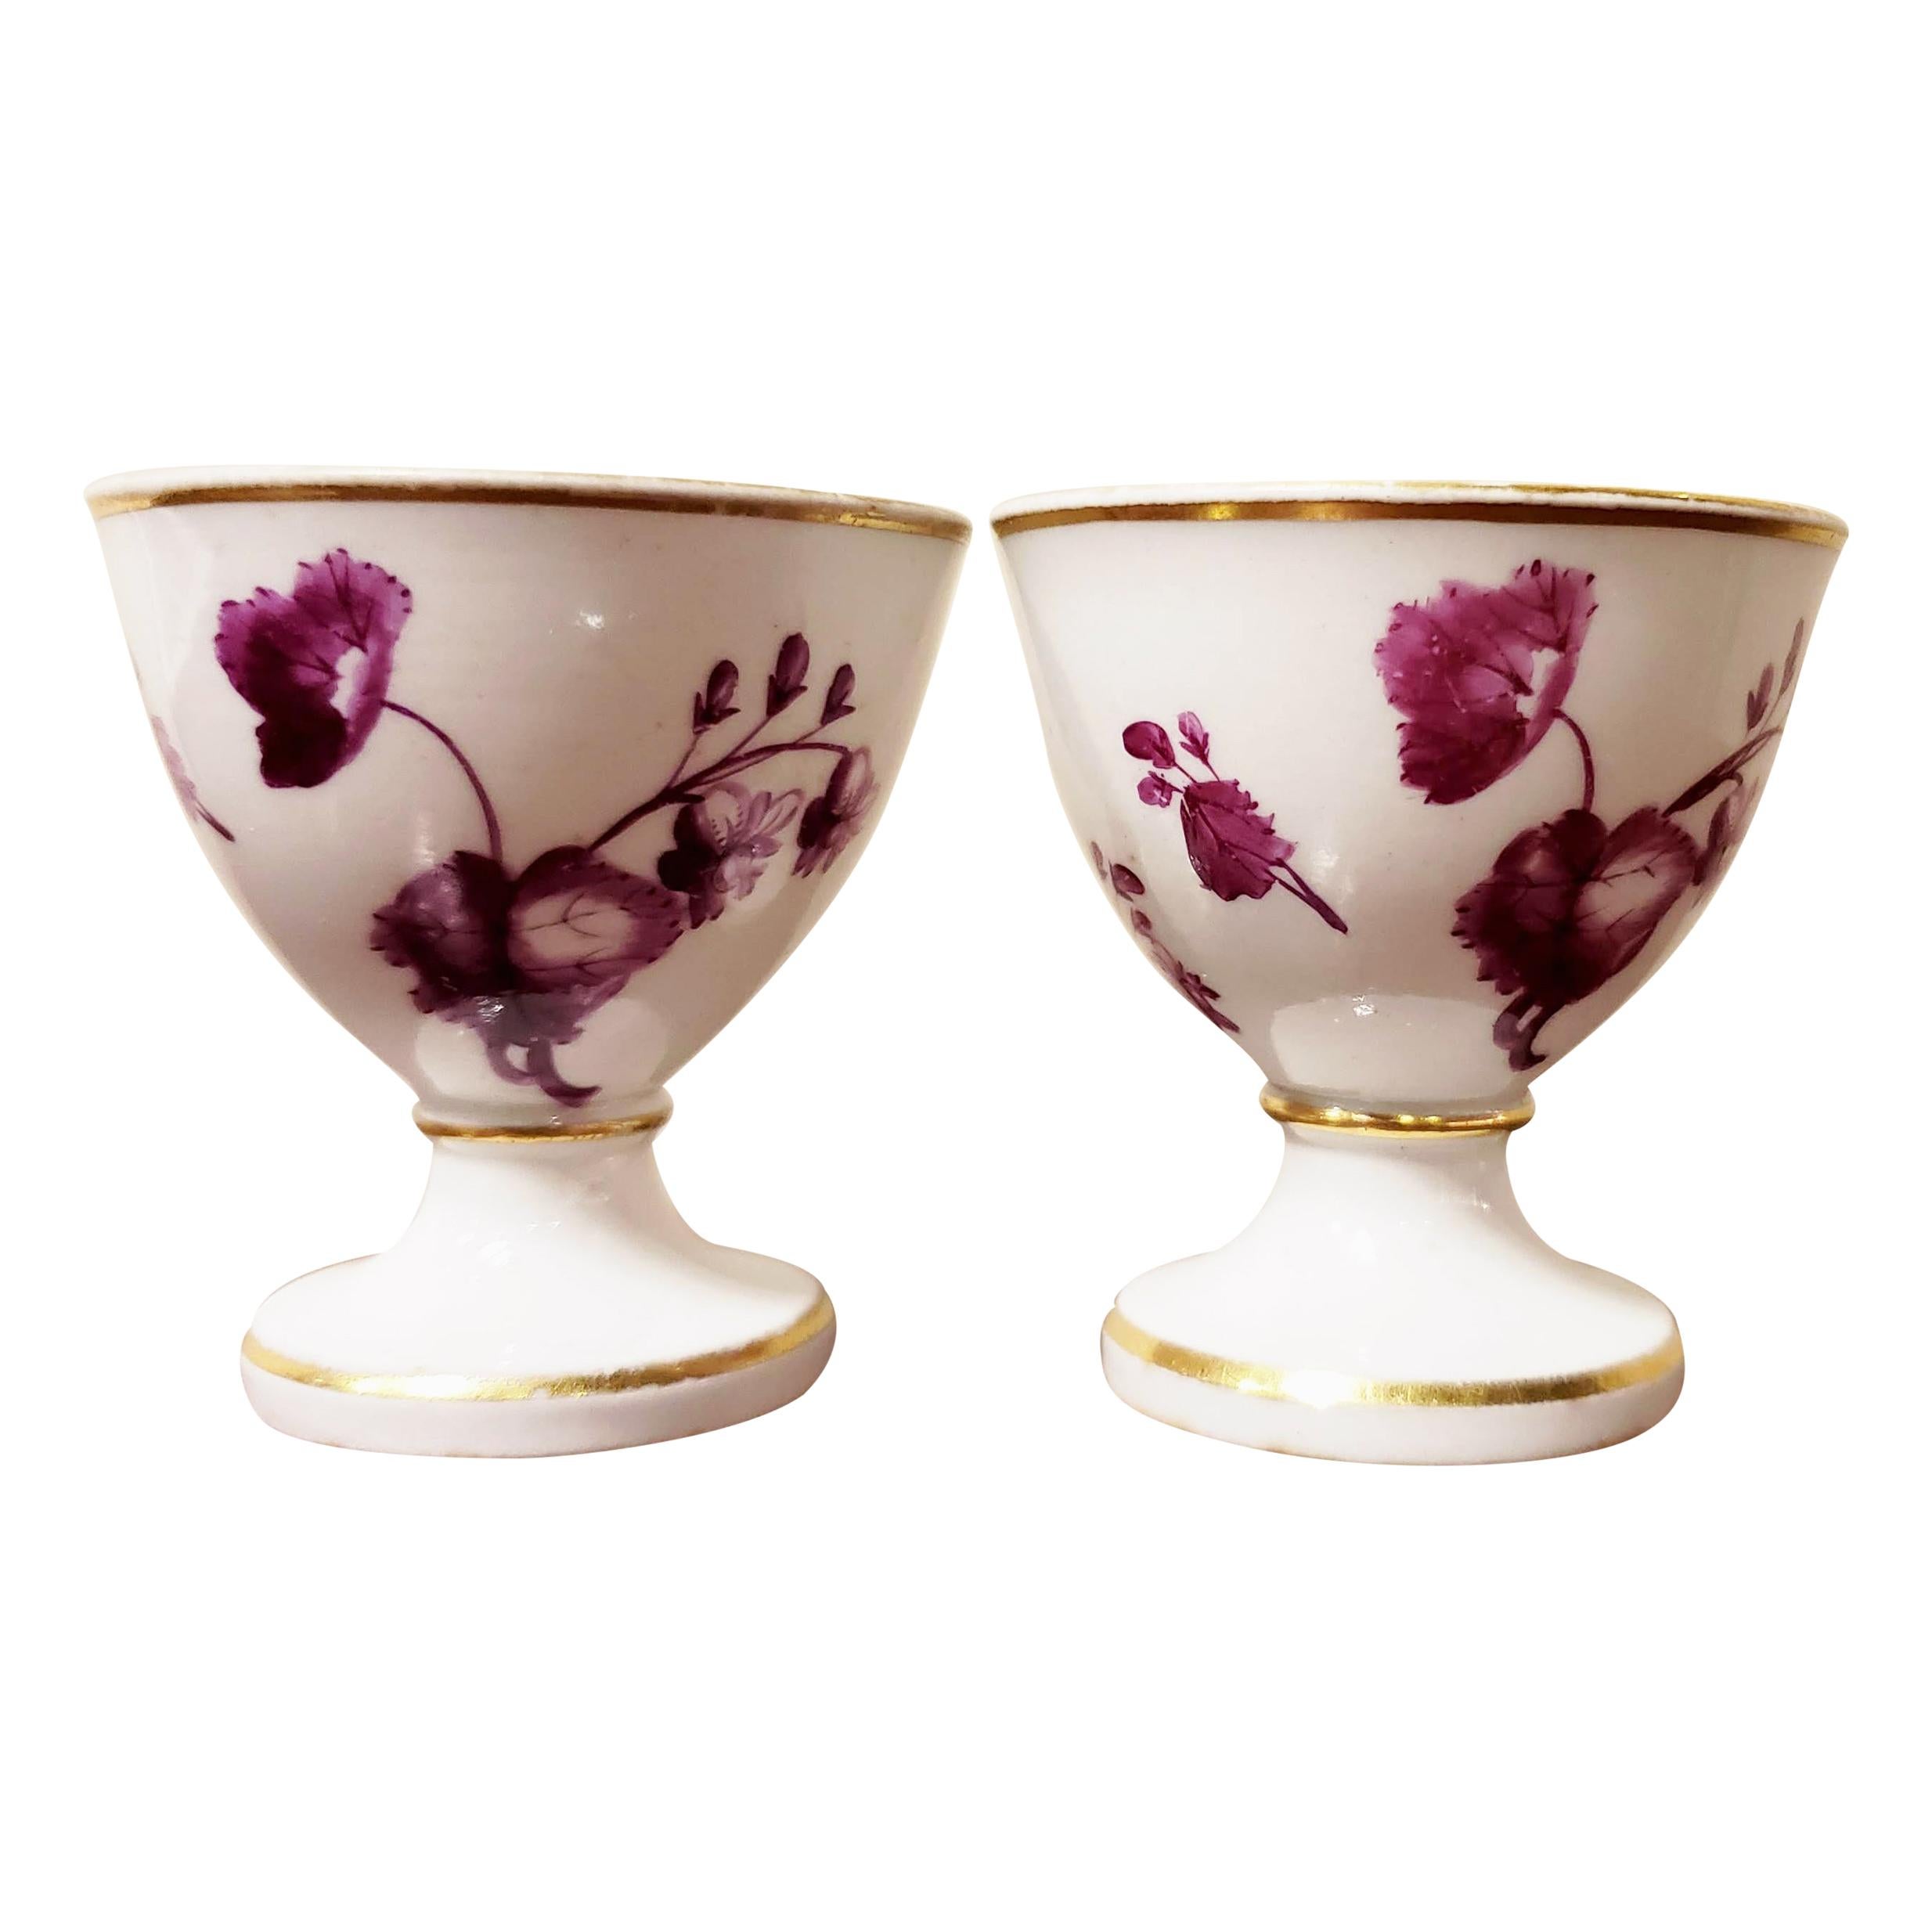 Flight, Barr & Barr Worcester Porcelain Egg Cups with Puce Flowers